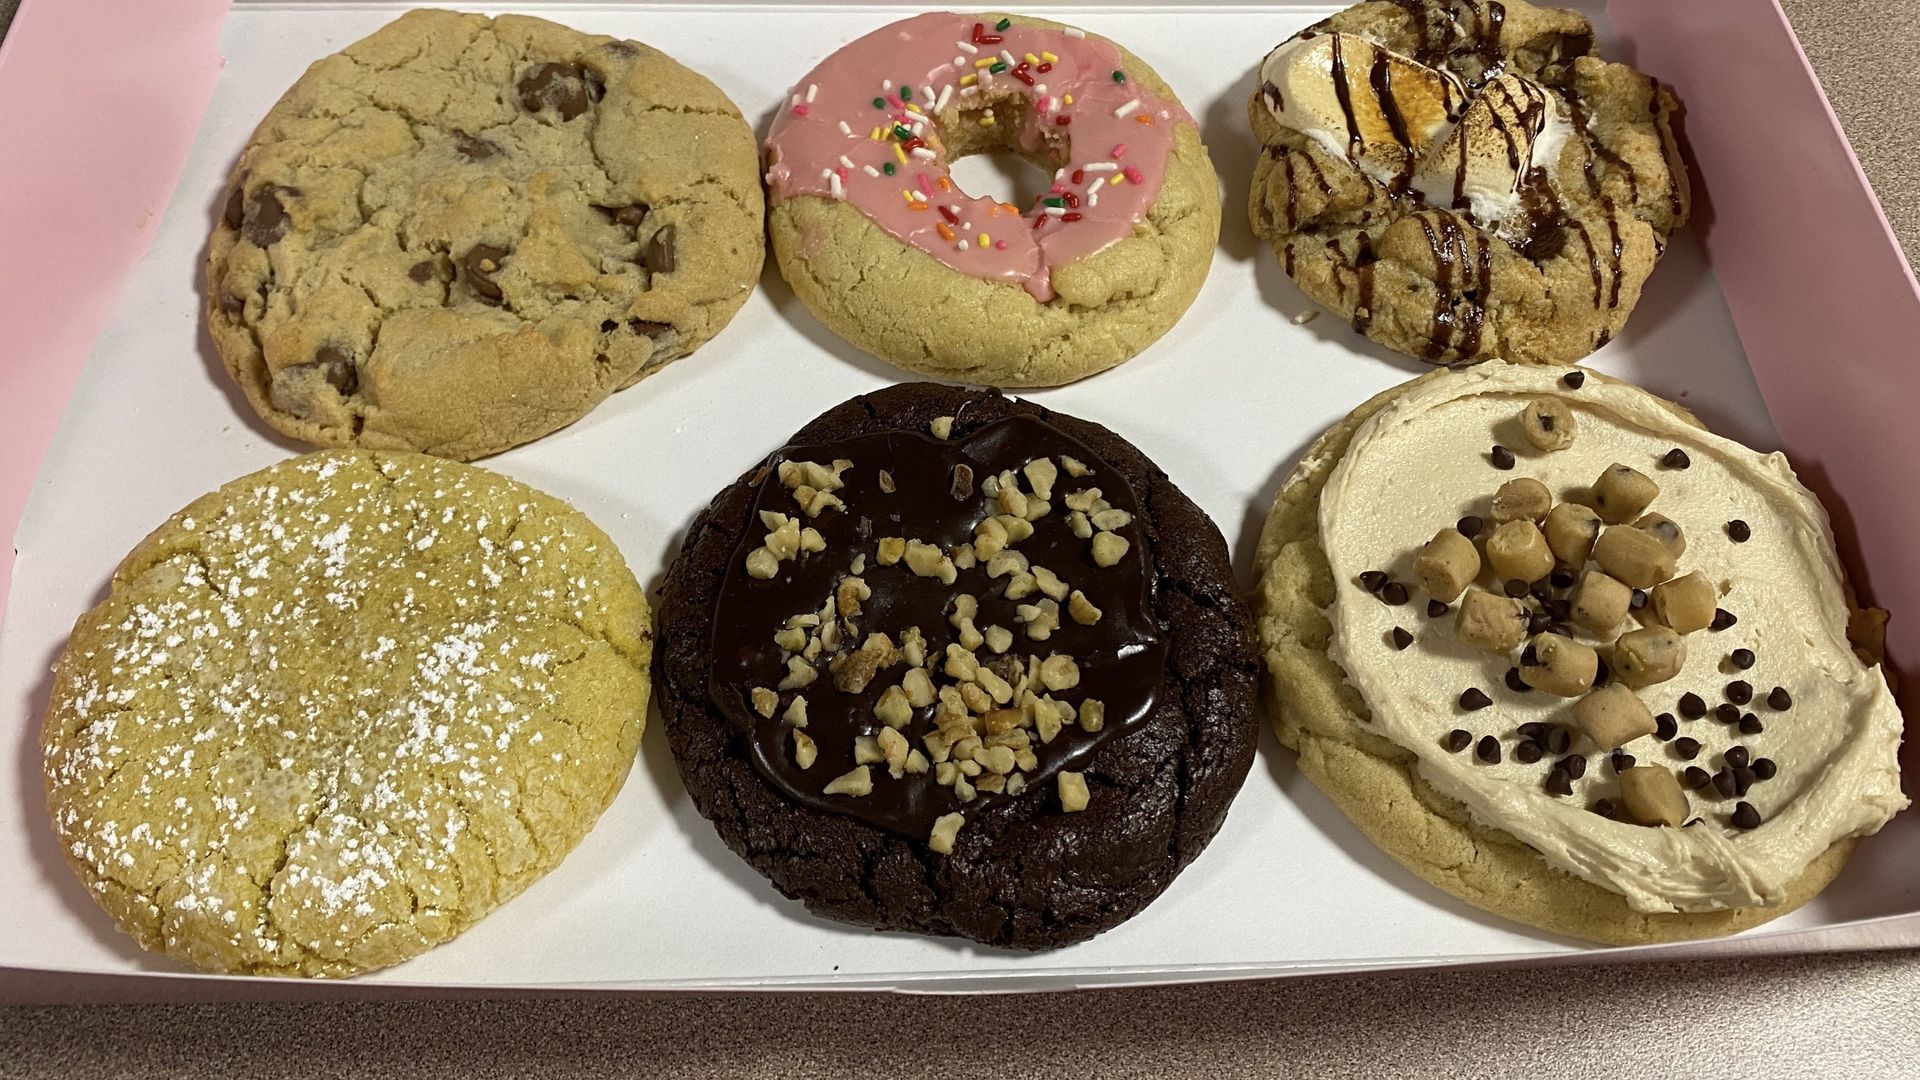 A half-dozen cookies in a box. 